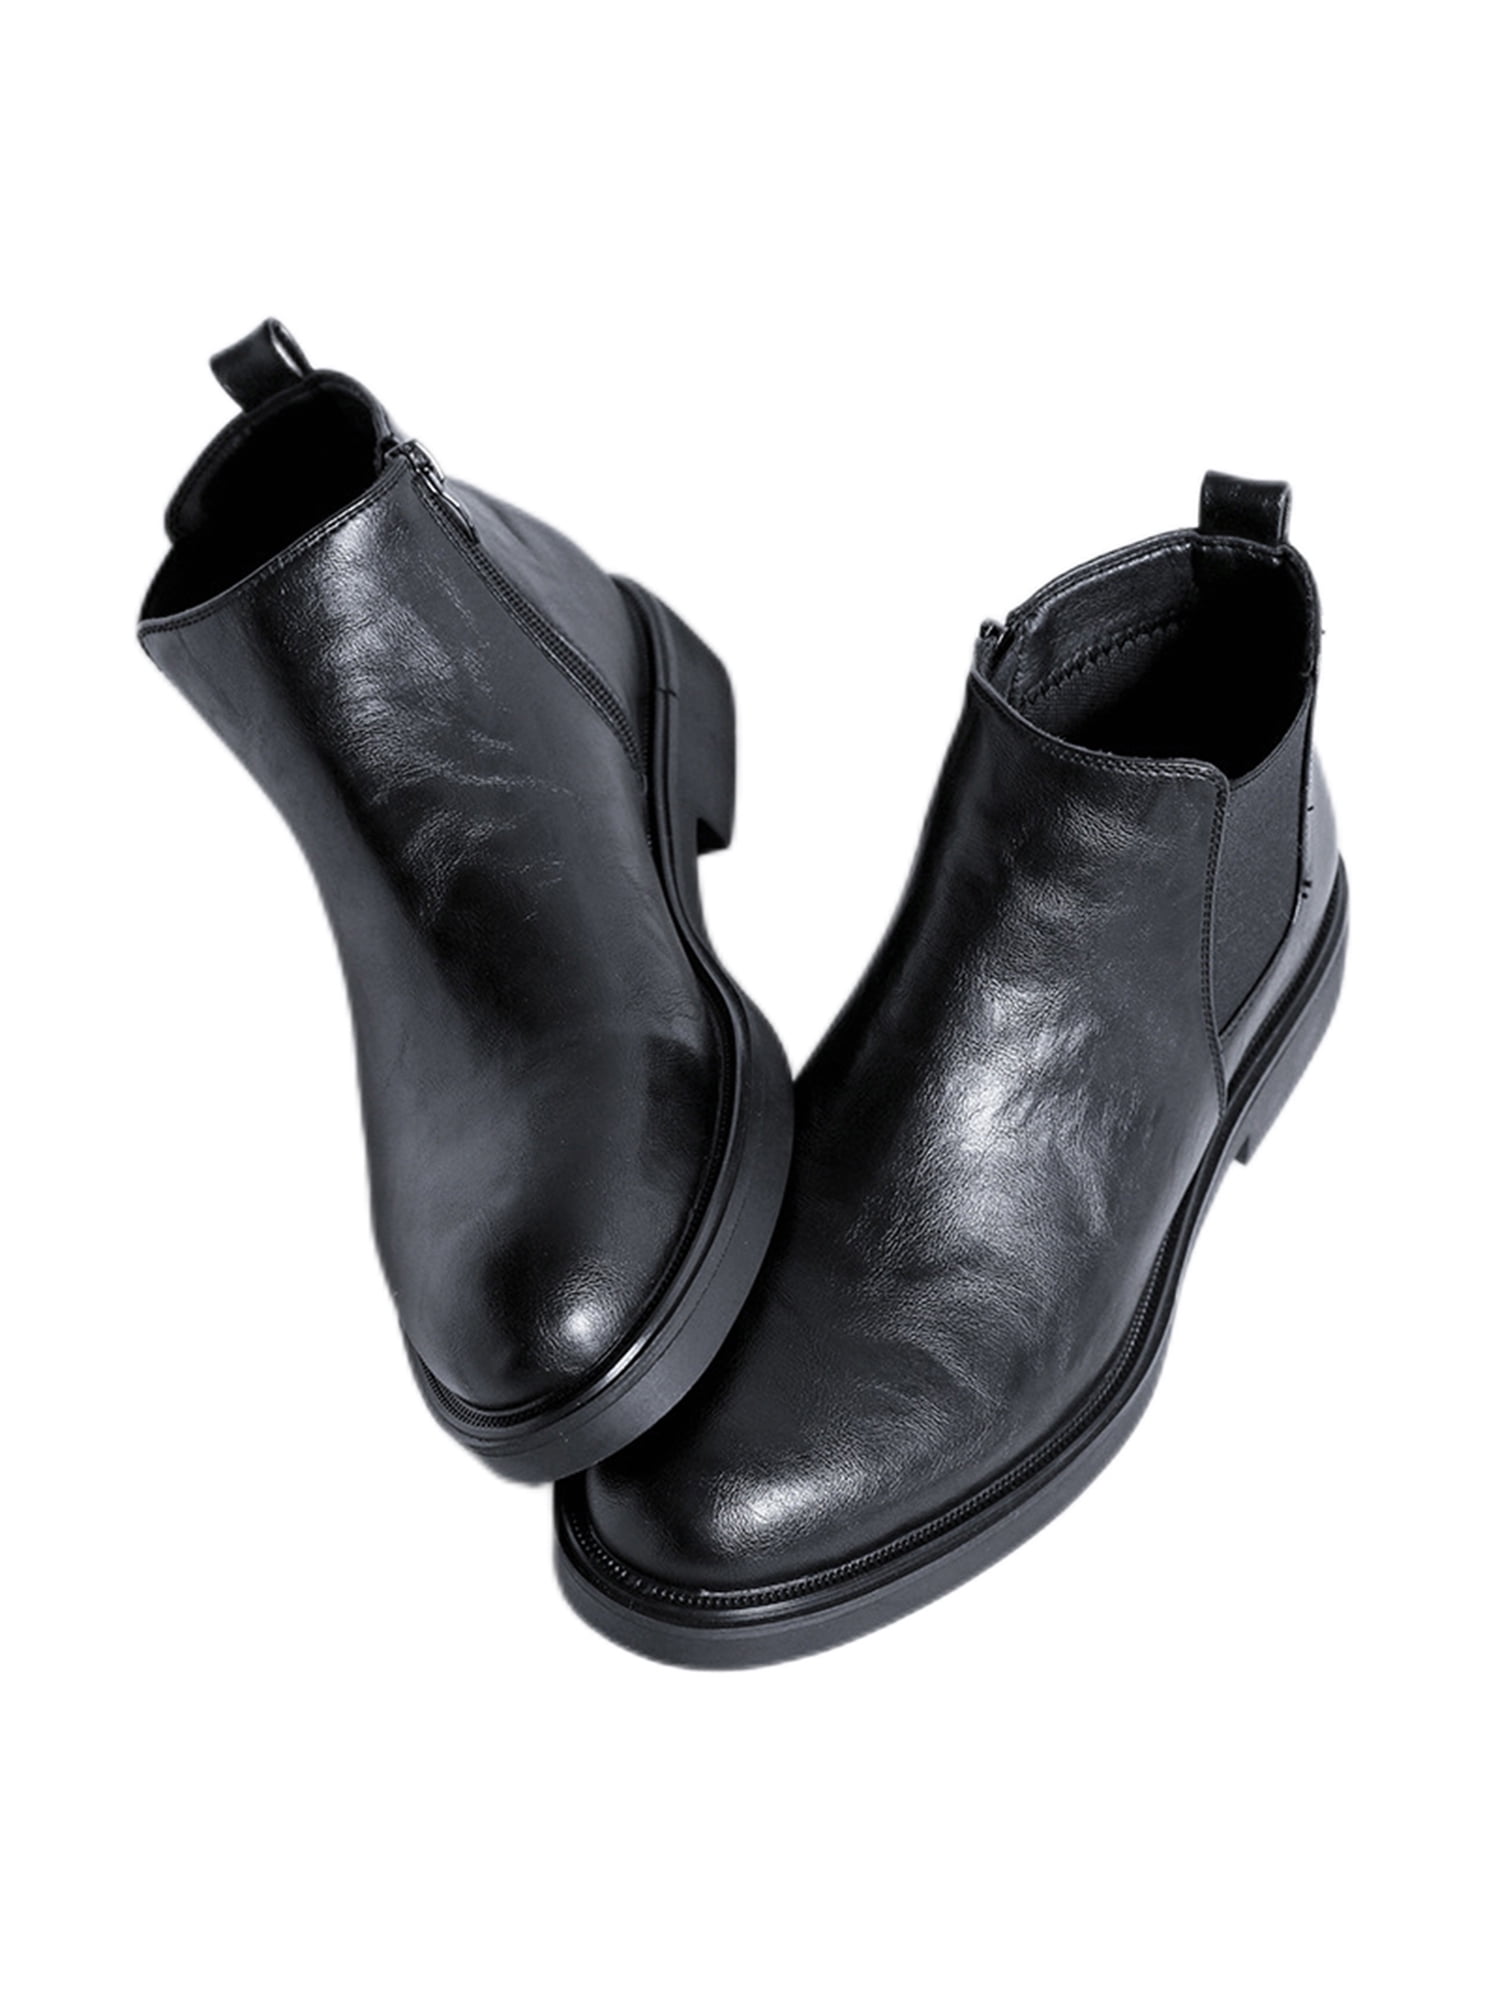 Eloshman Men Leather Chelsea Boots Zip Ankle Boot Elastic Shoes Formal Casual Waterproof Comfortable Black 9.5 - Walmart.com